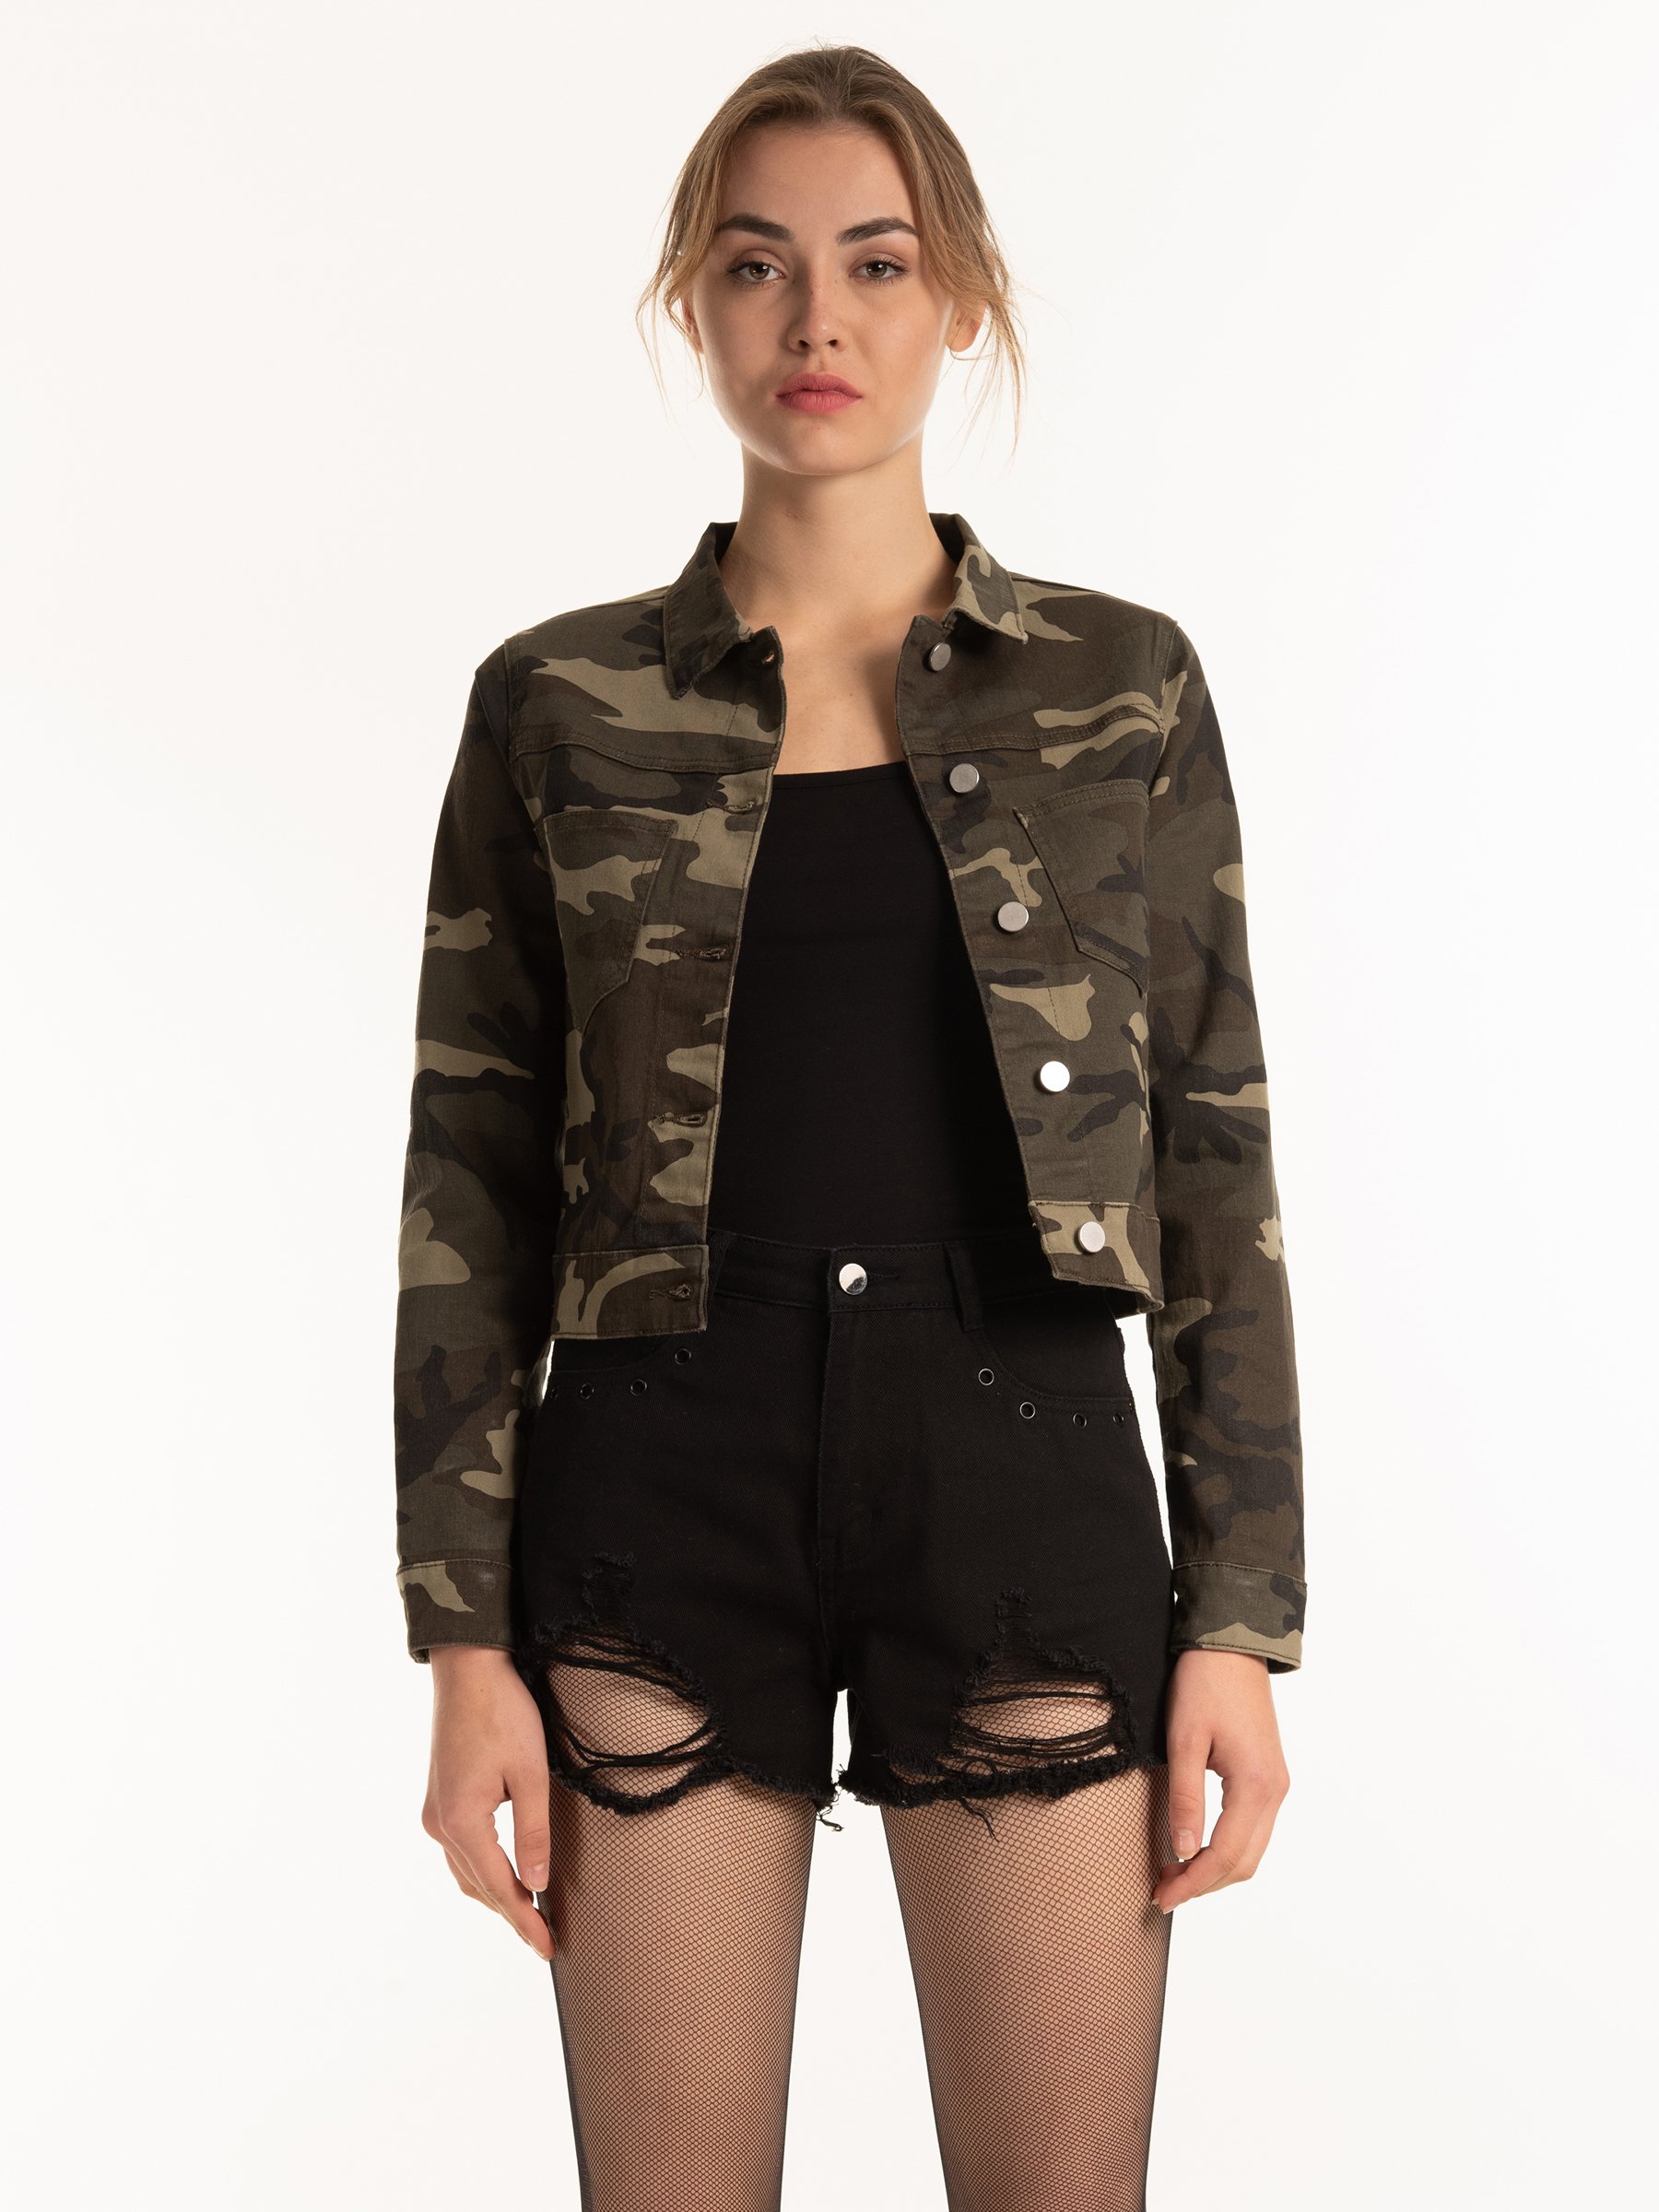 Camouflage Denim Jacket #AFF, , #AFF, #affiliate, #Jacket, #Denim, # Camouflage | Grunge outfits, Fashion, Black denim jacket